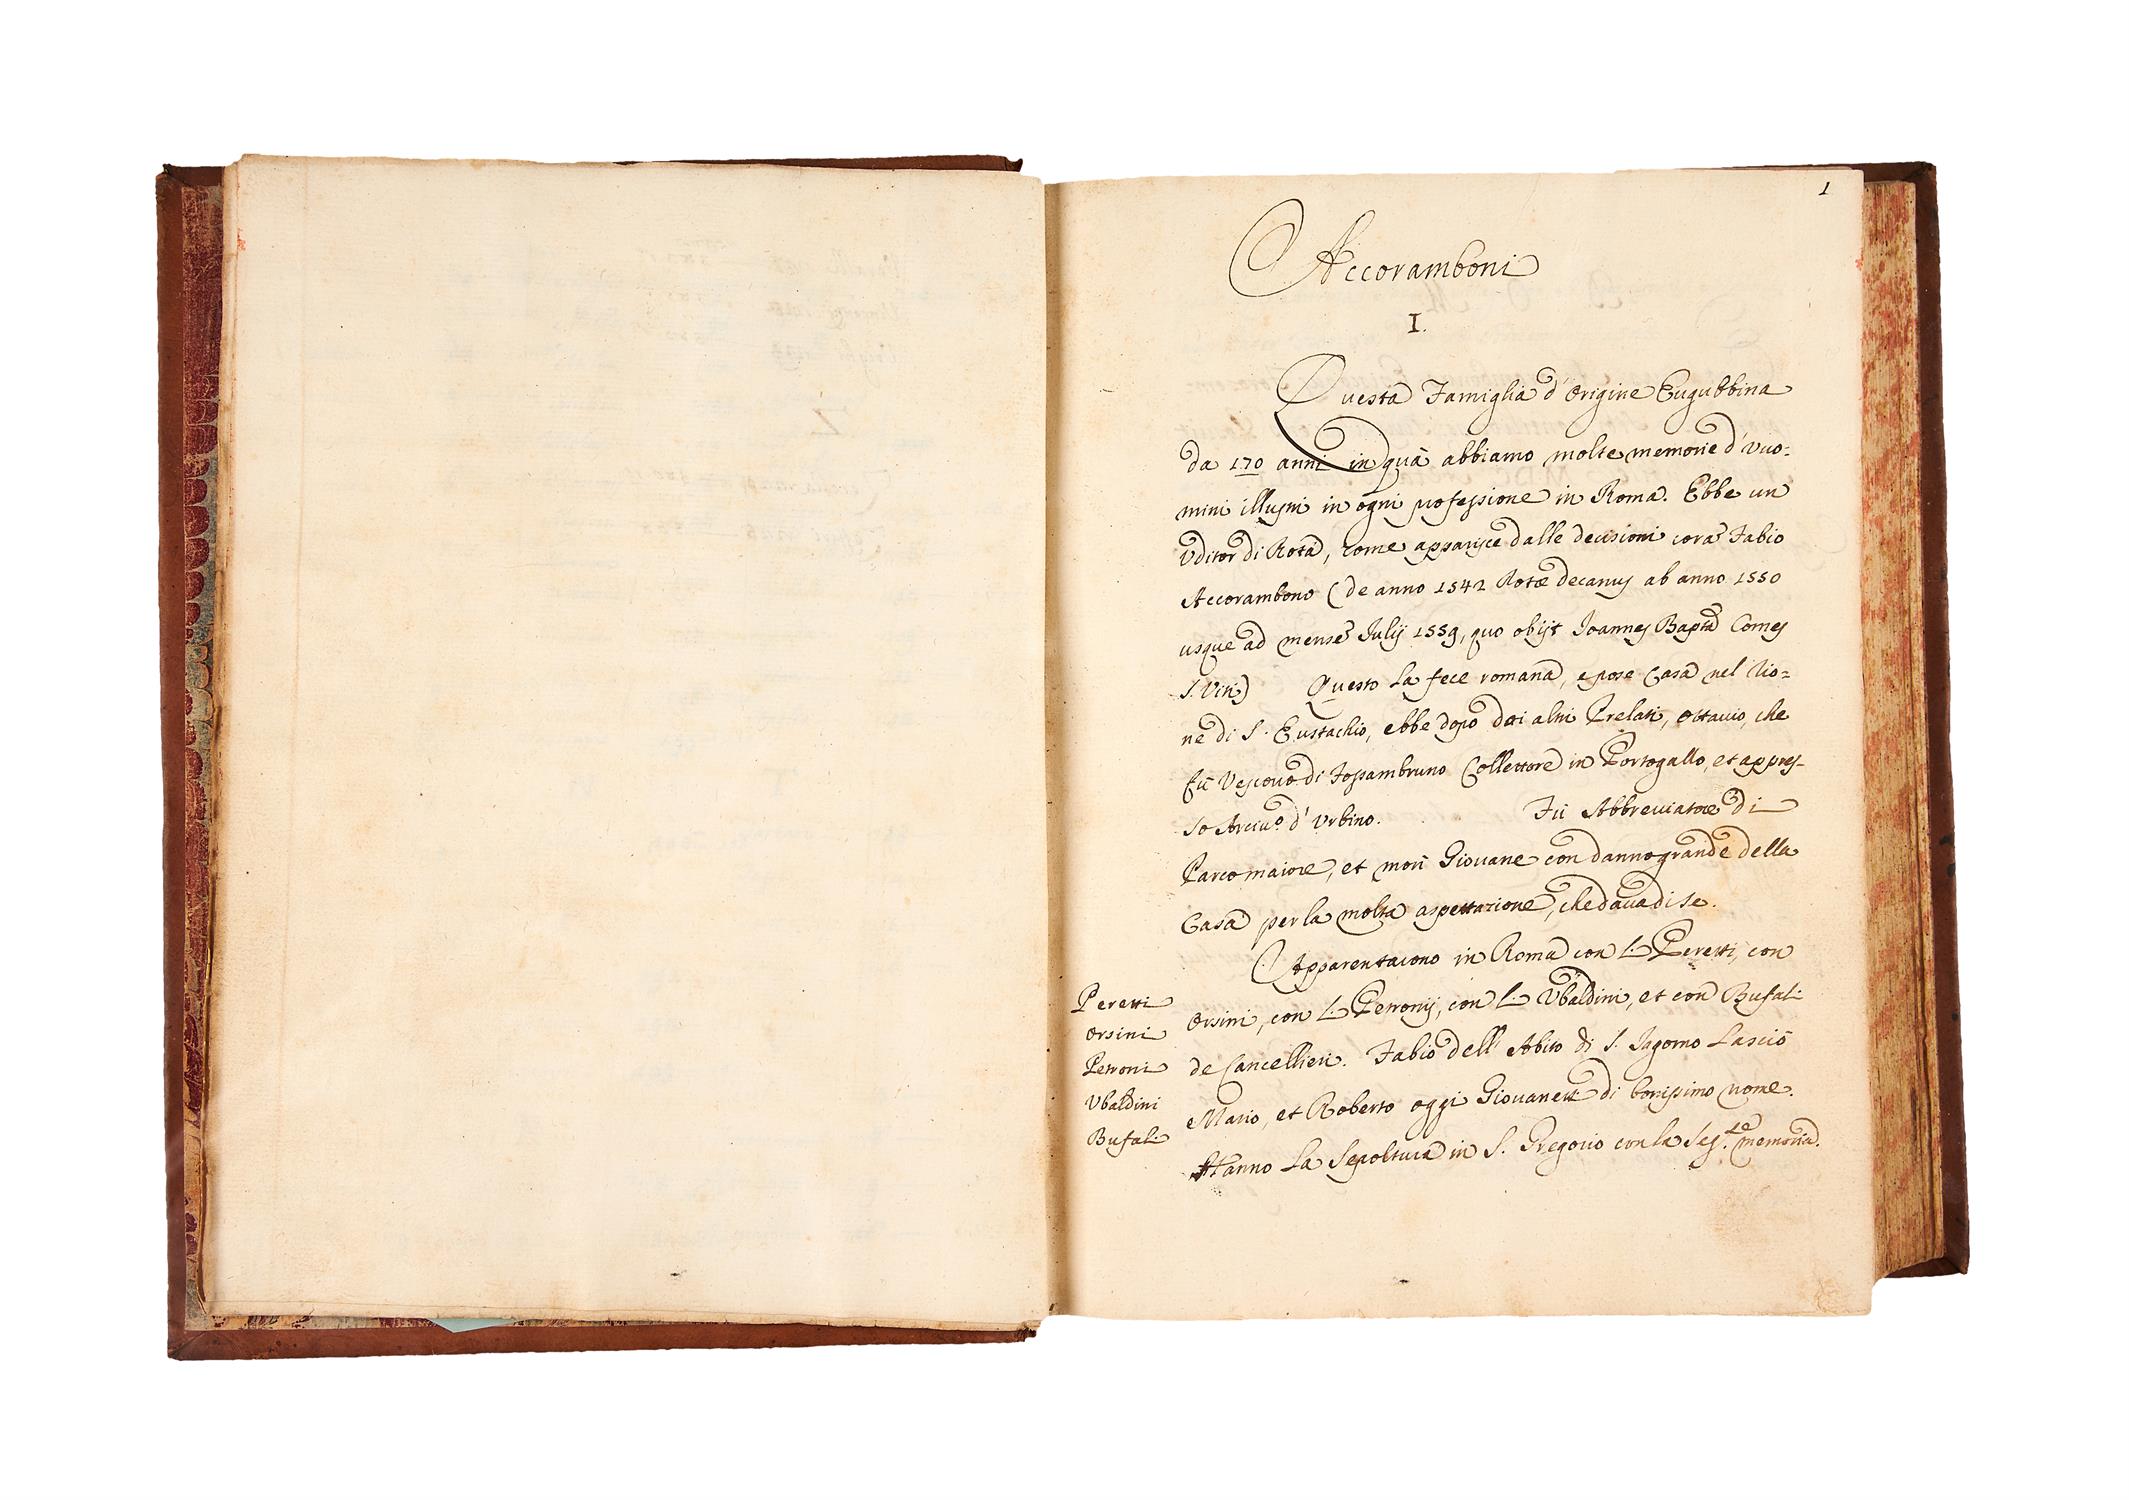 Ɵ Manuscritto delle Famiglie Romane Nobili, in Italian, manuscript on paper [Italy, 18th century] - Image 2 of 5